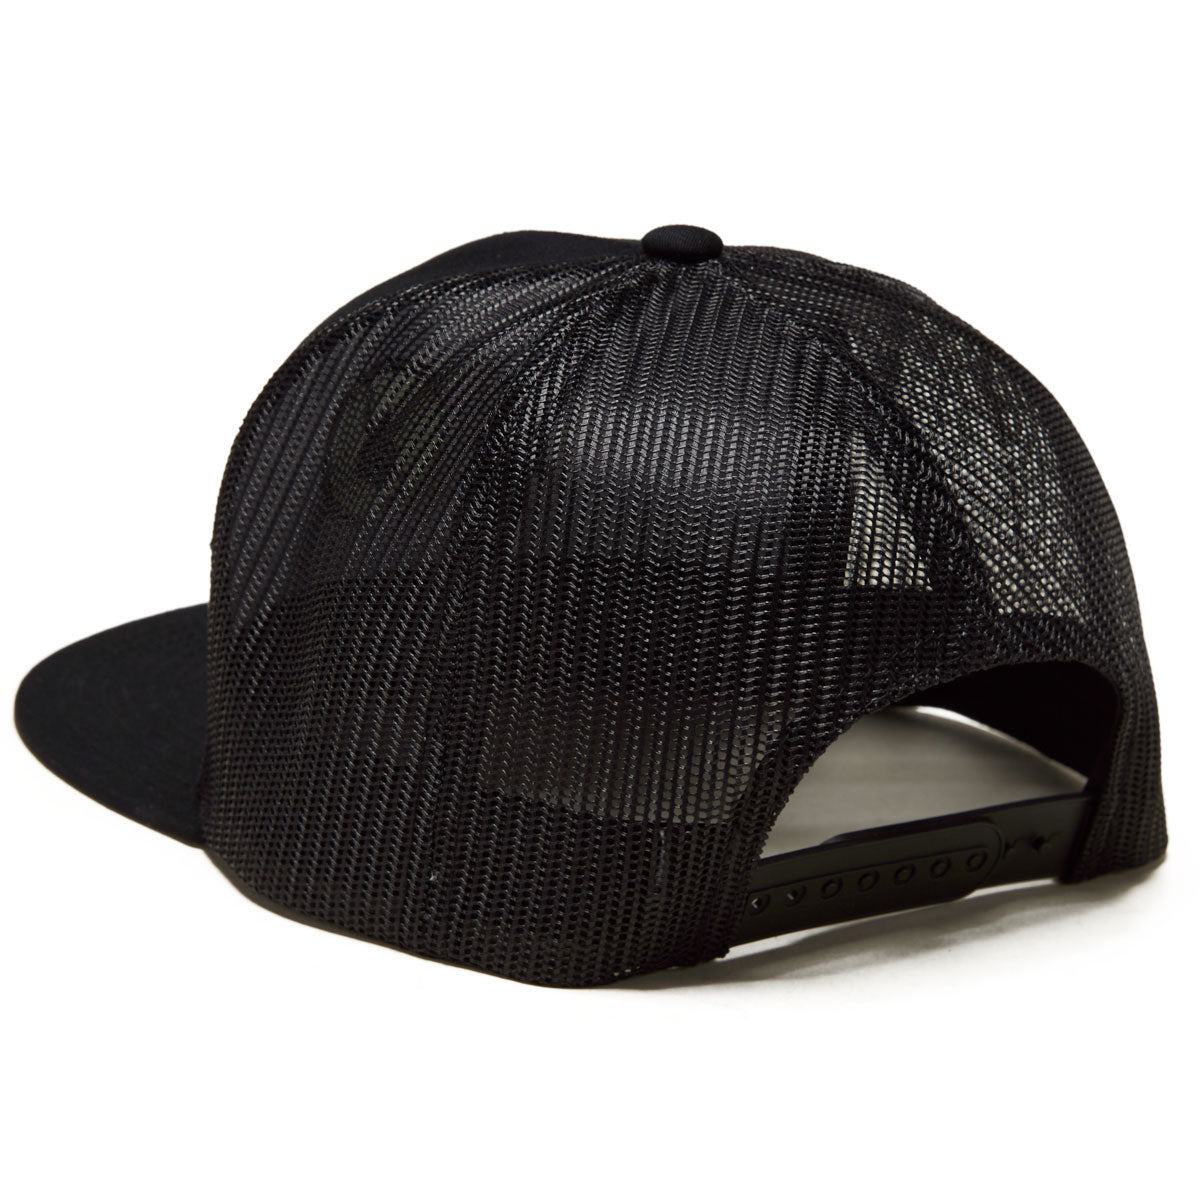 Shorty's Fulfill The Dream Snapback Hat - Black image 2